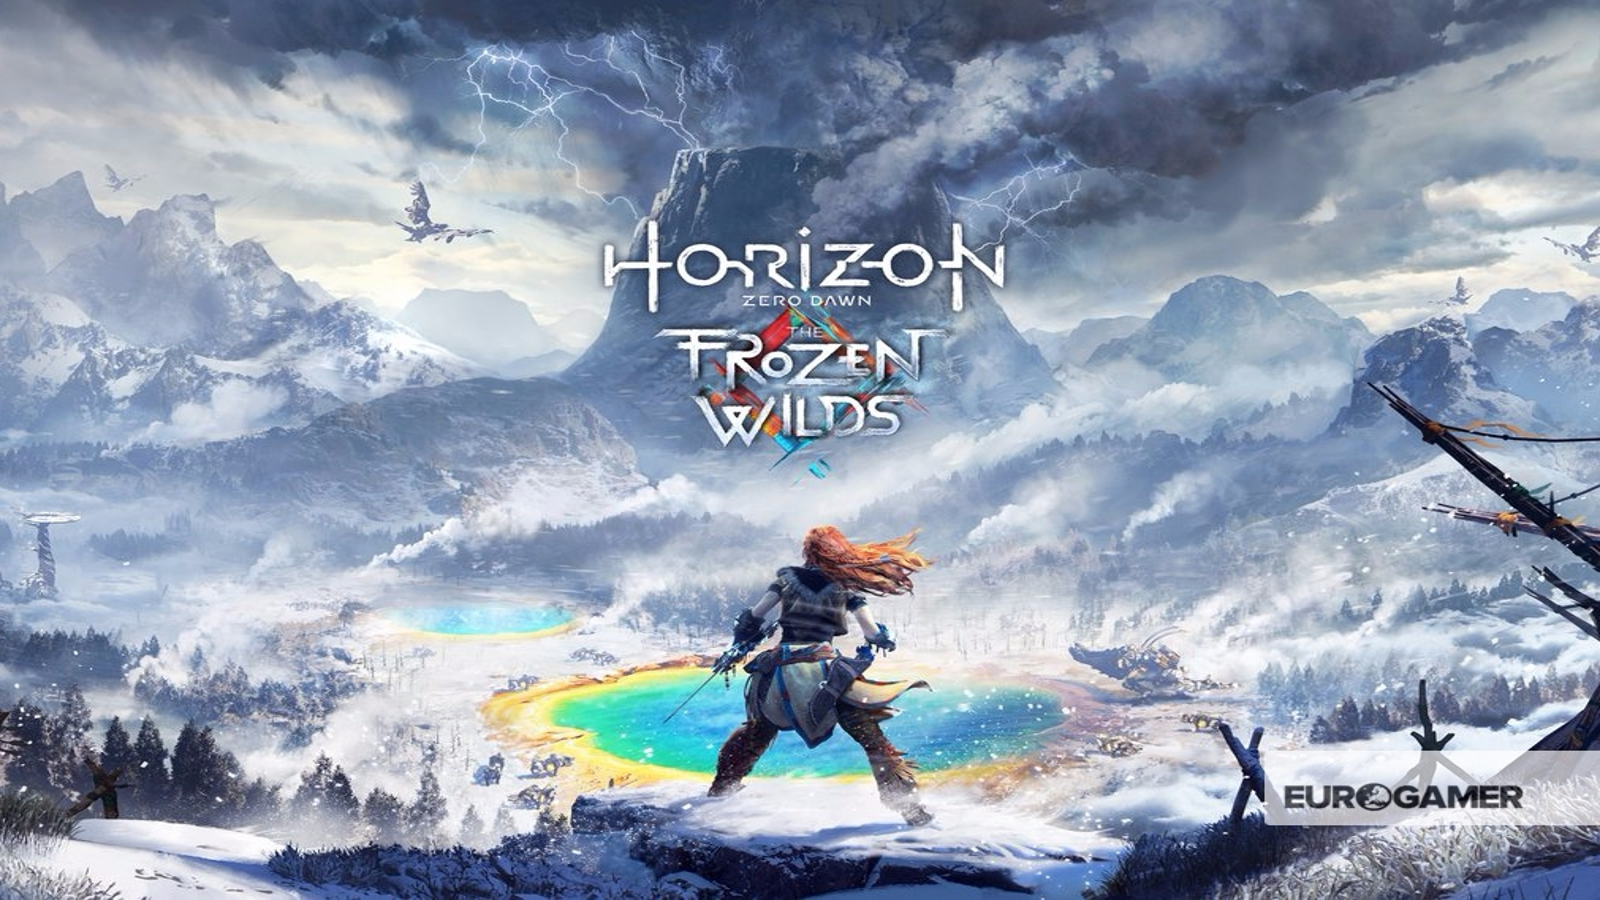 Horizon Zero Dawn Frozen Wilds walkthrough and guide - how to